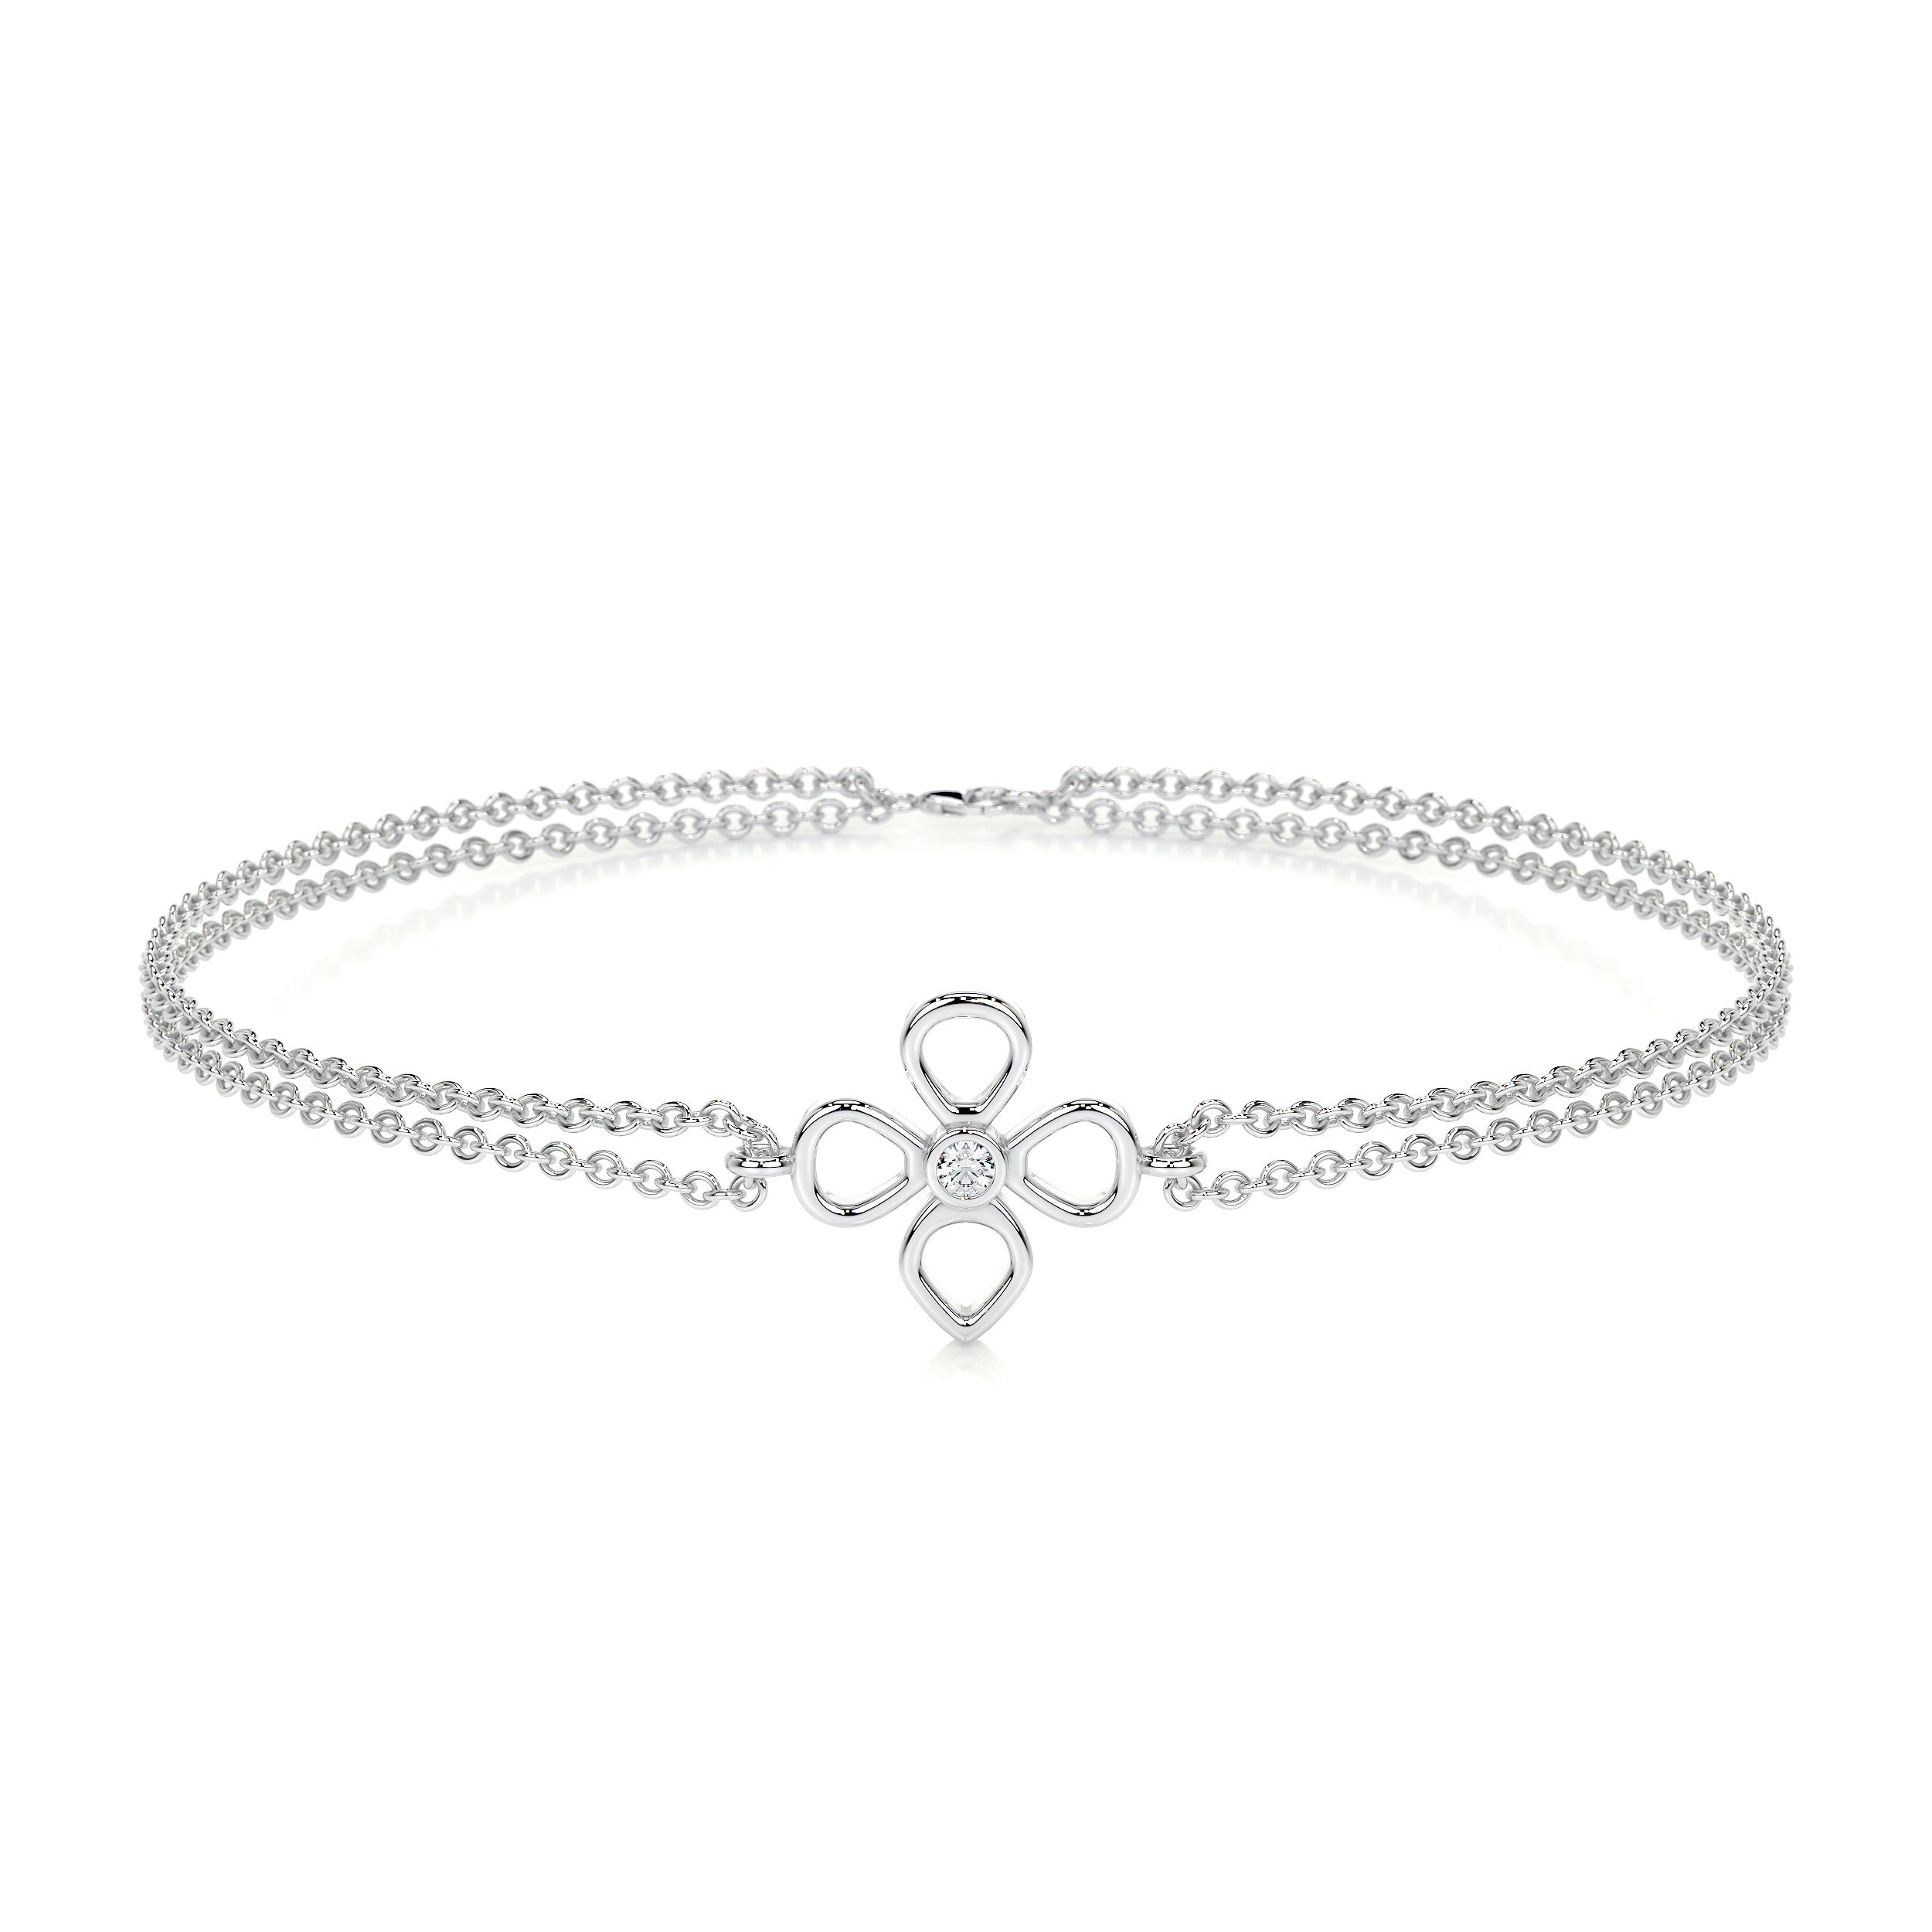 Dolores Diamonds Bracelet   (0.02 Carat) -18K White Gold